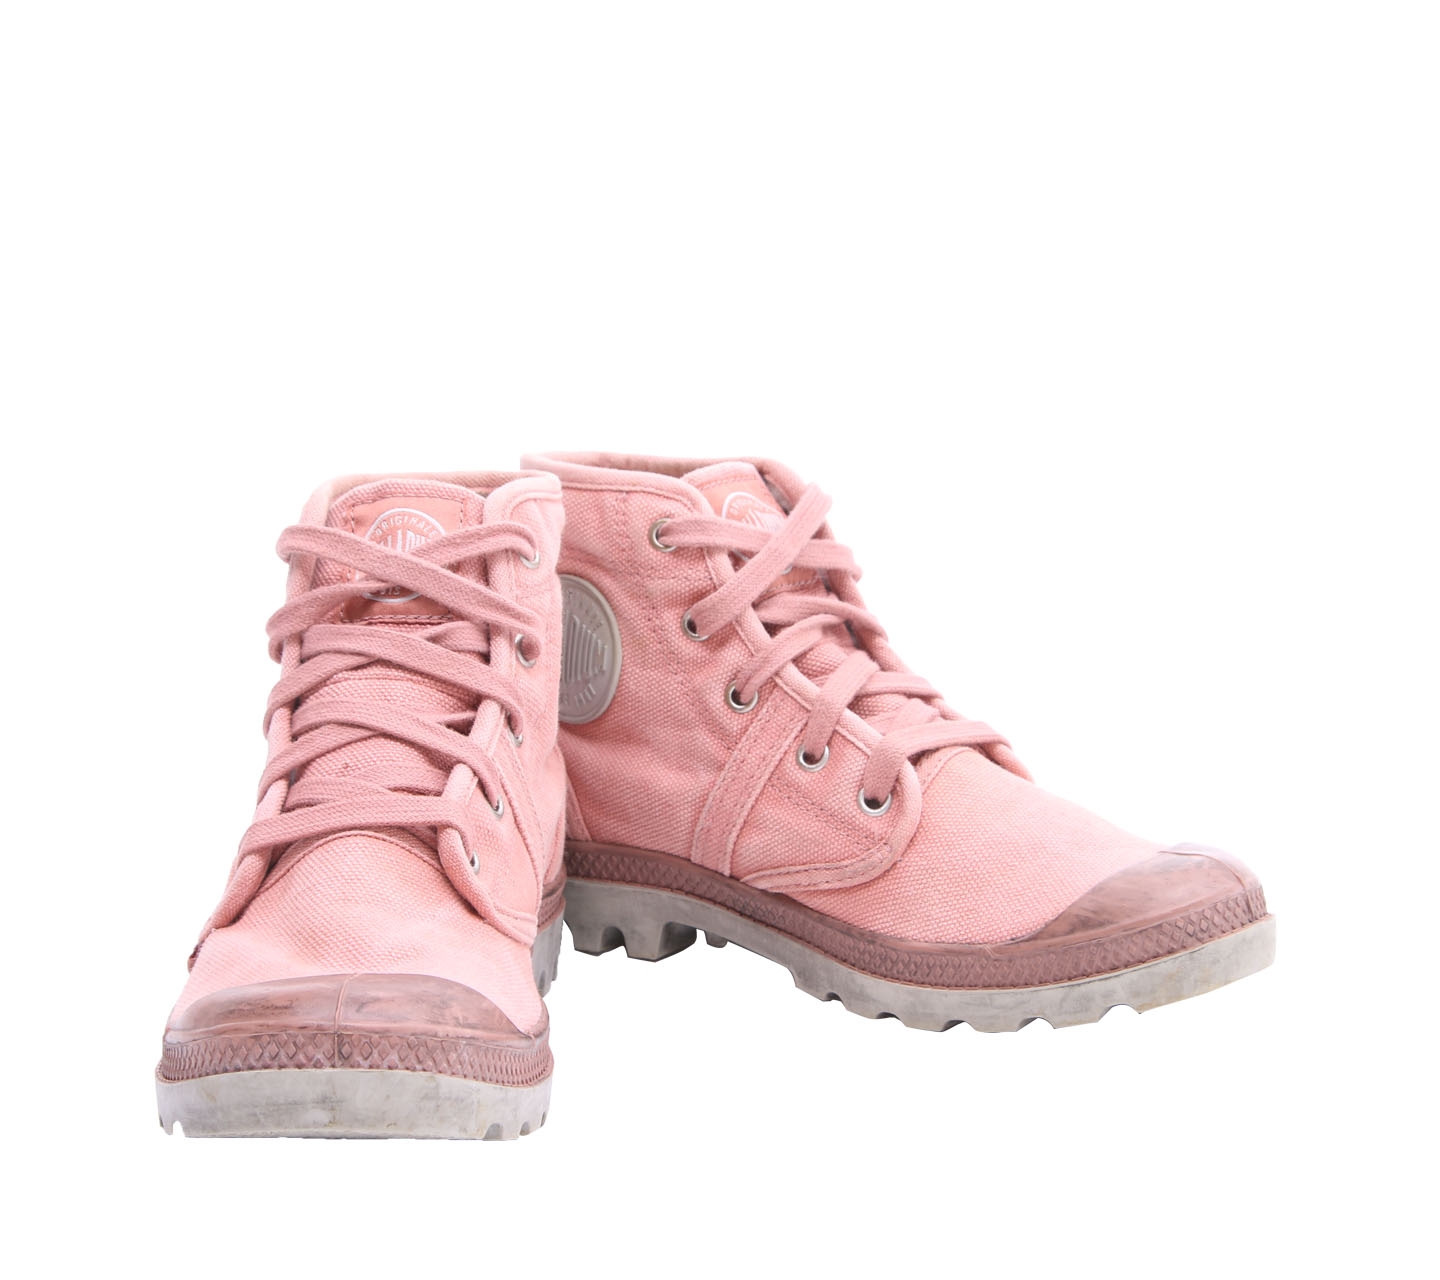 Palladium Pink Sneakers